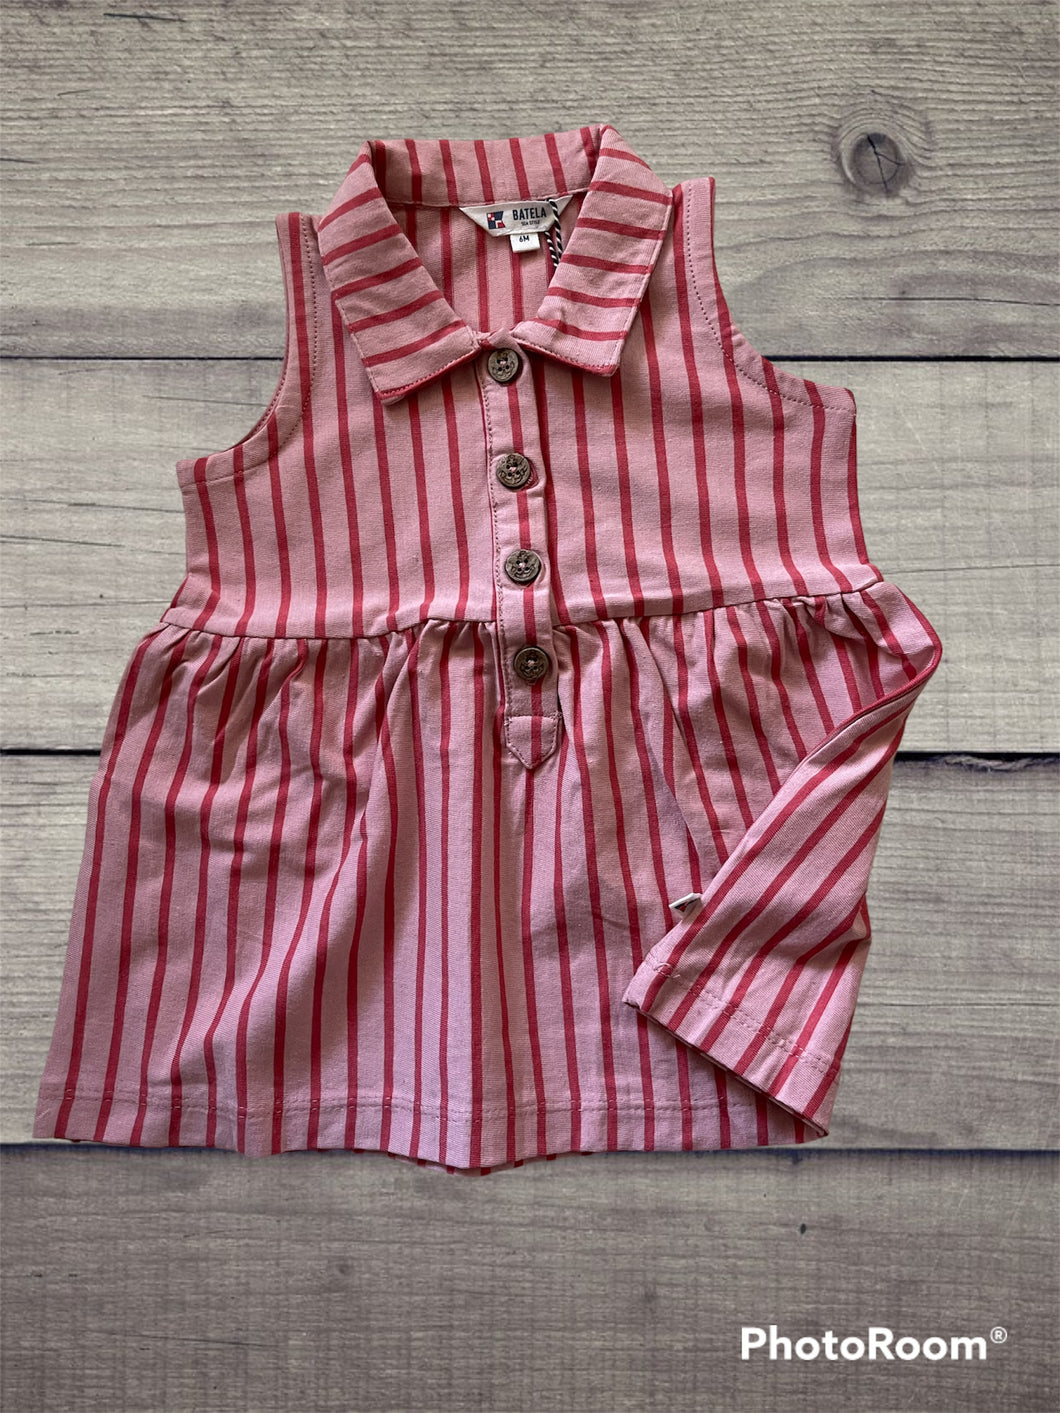 Batela Sleeveless Pink Stripe Dress